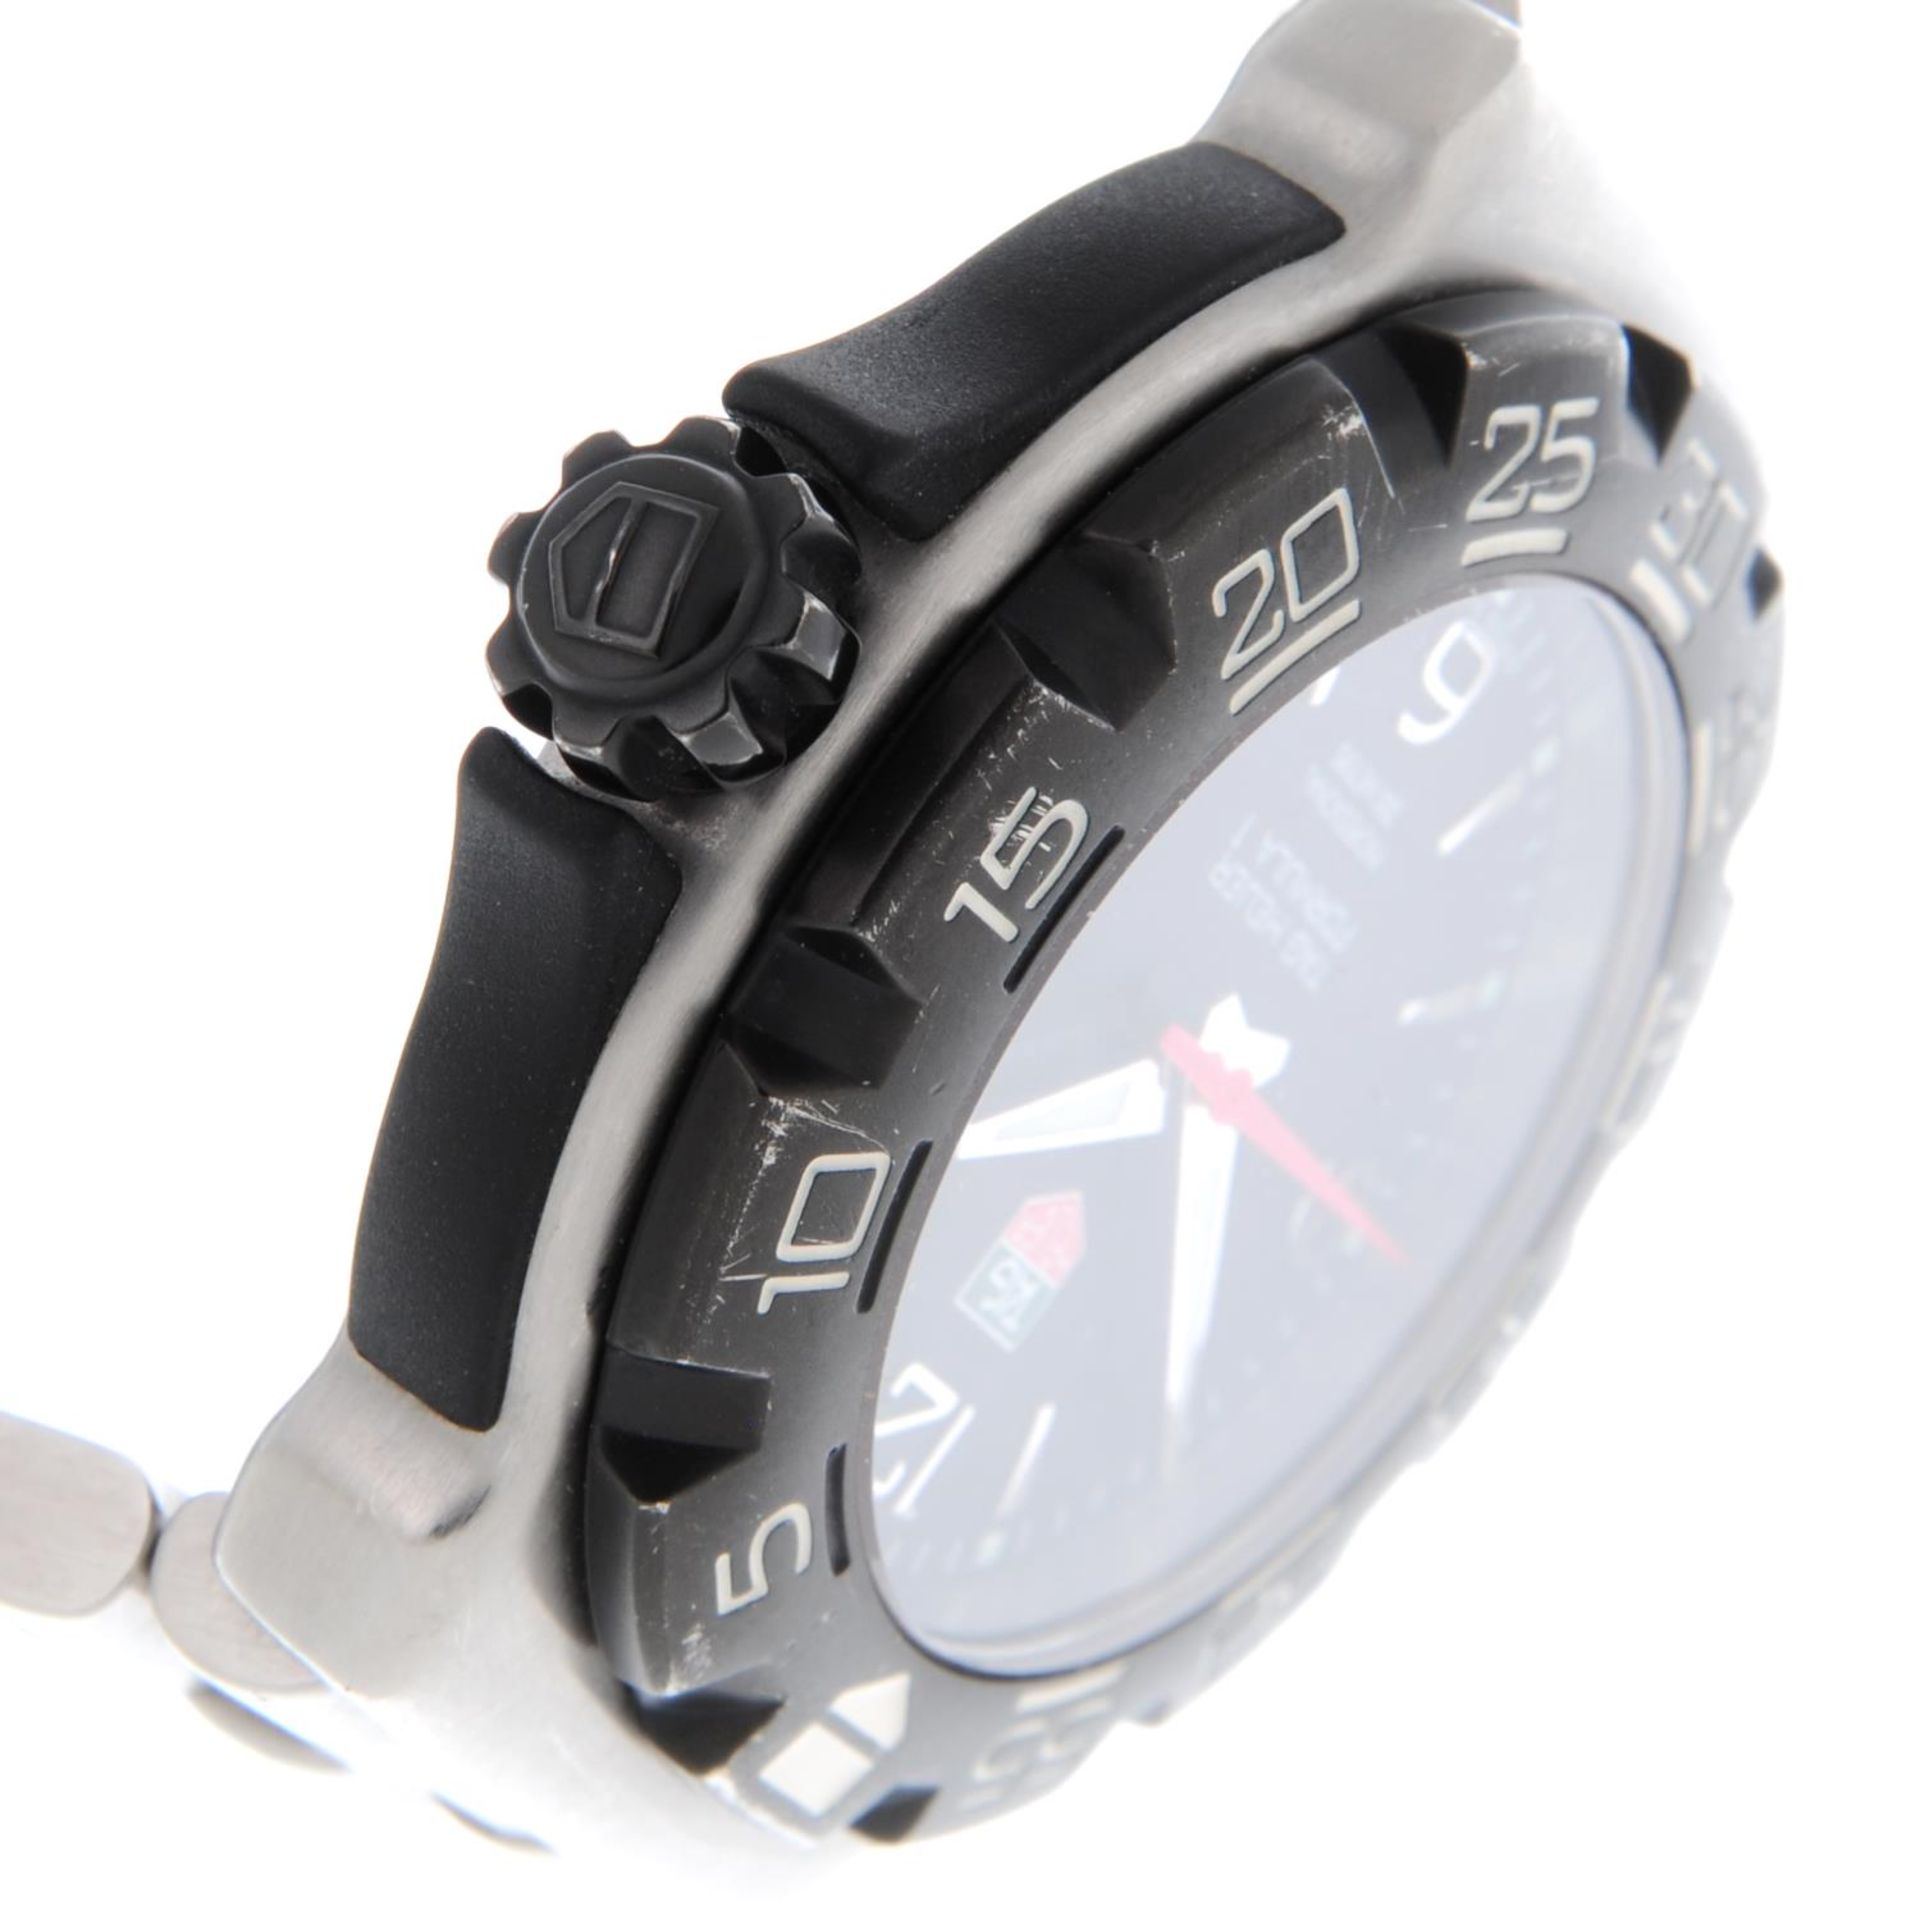 TAG HEUER - a Formula 1 bracelet watch. - Image 3 of 4